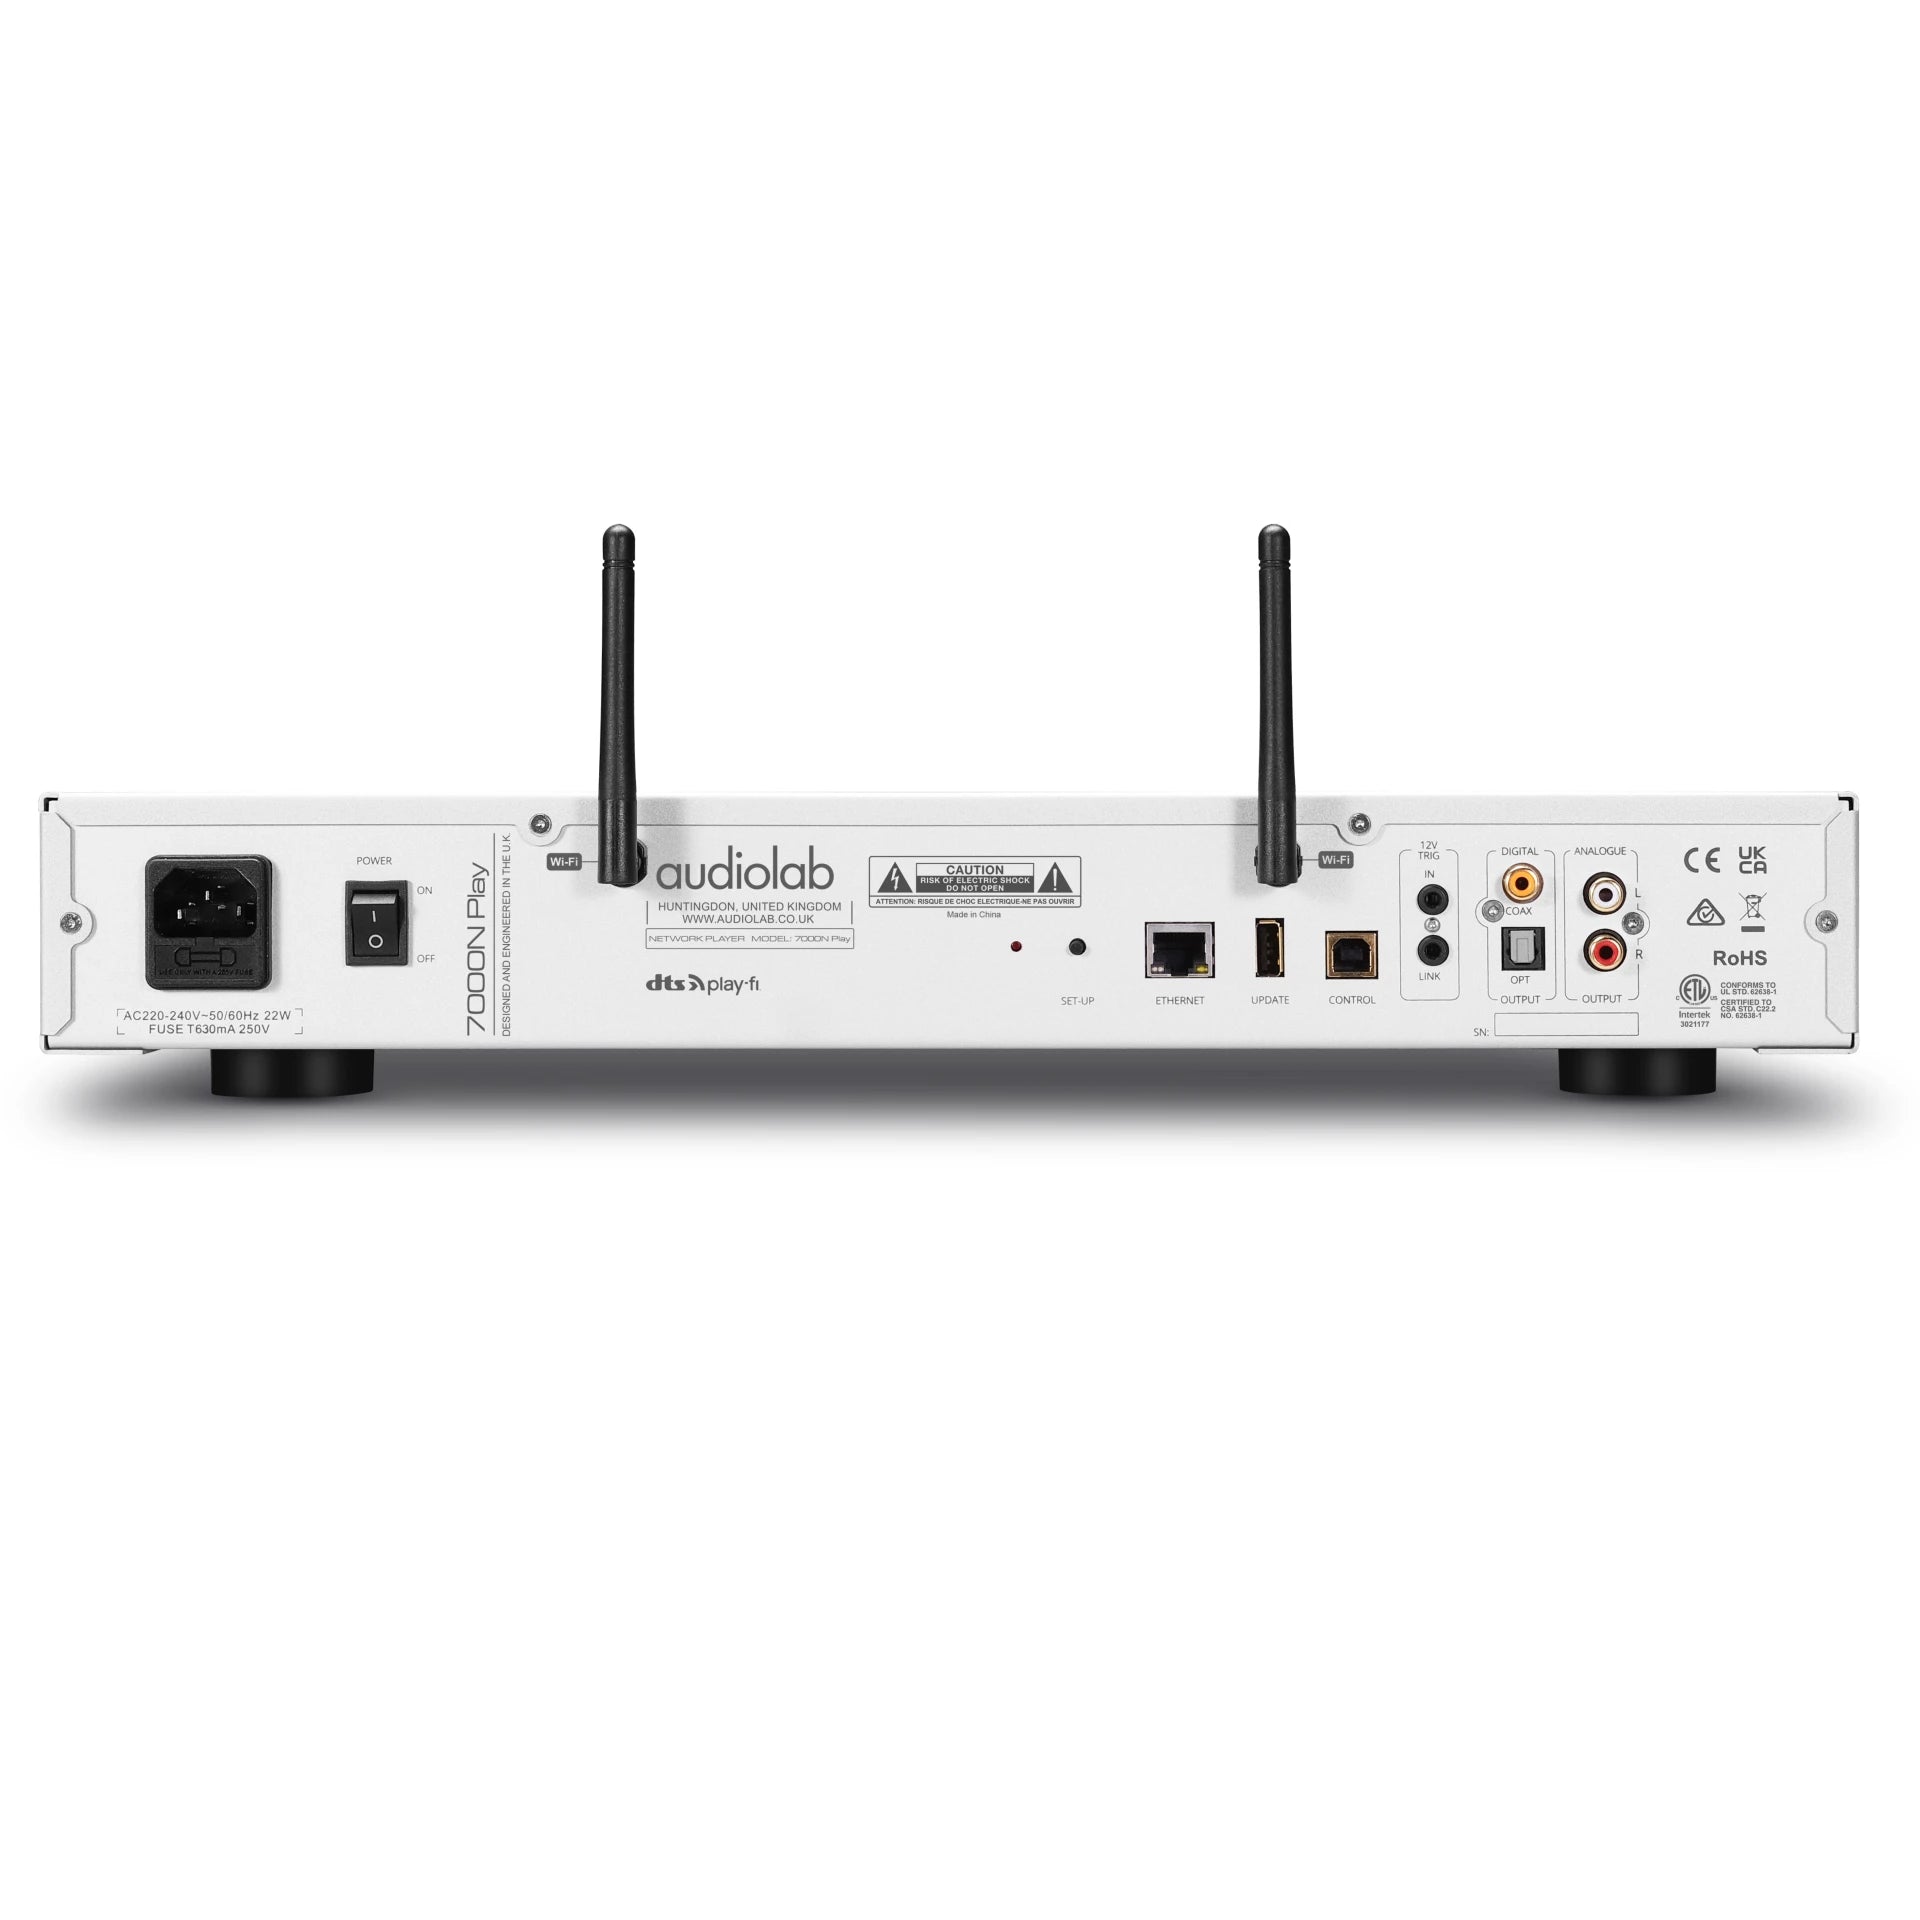 Audiolab 7000 N PLAY - Network Streamer